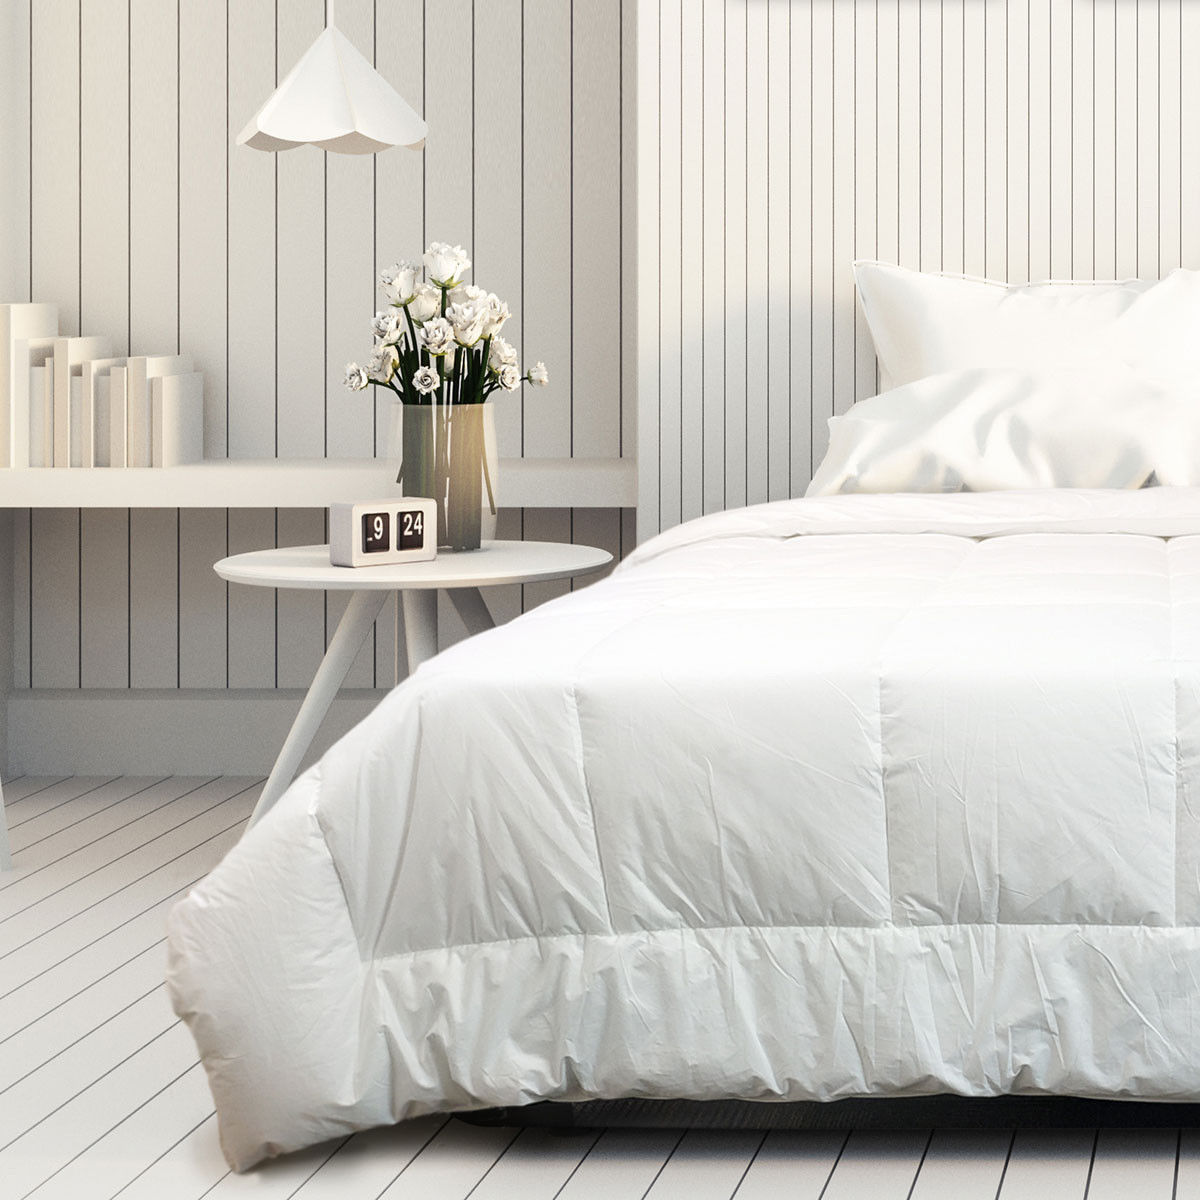 Would a light weight duvet insert enhance your bedding collection?